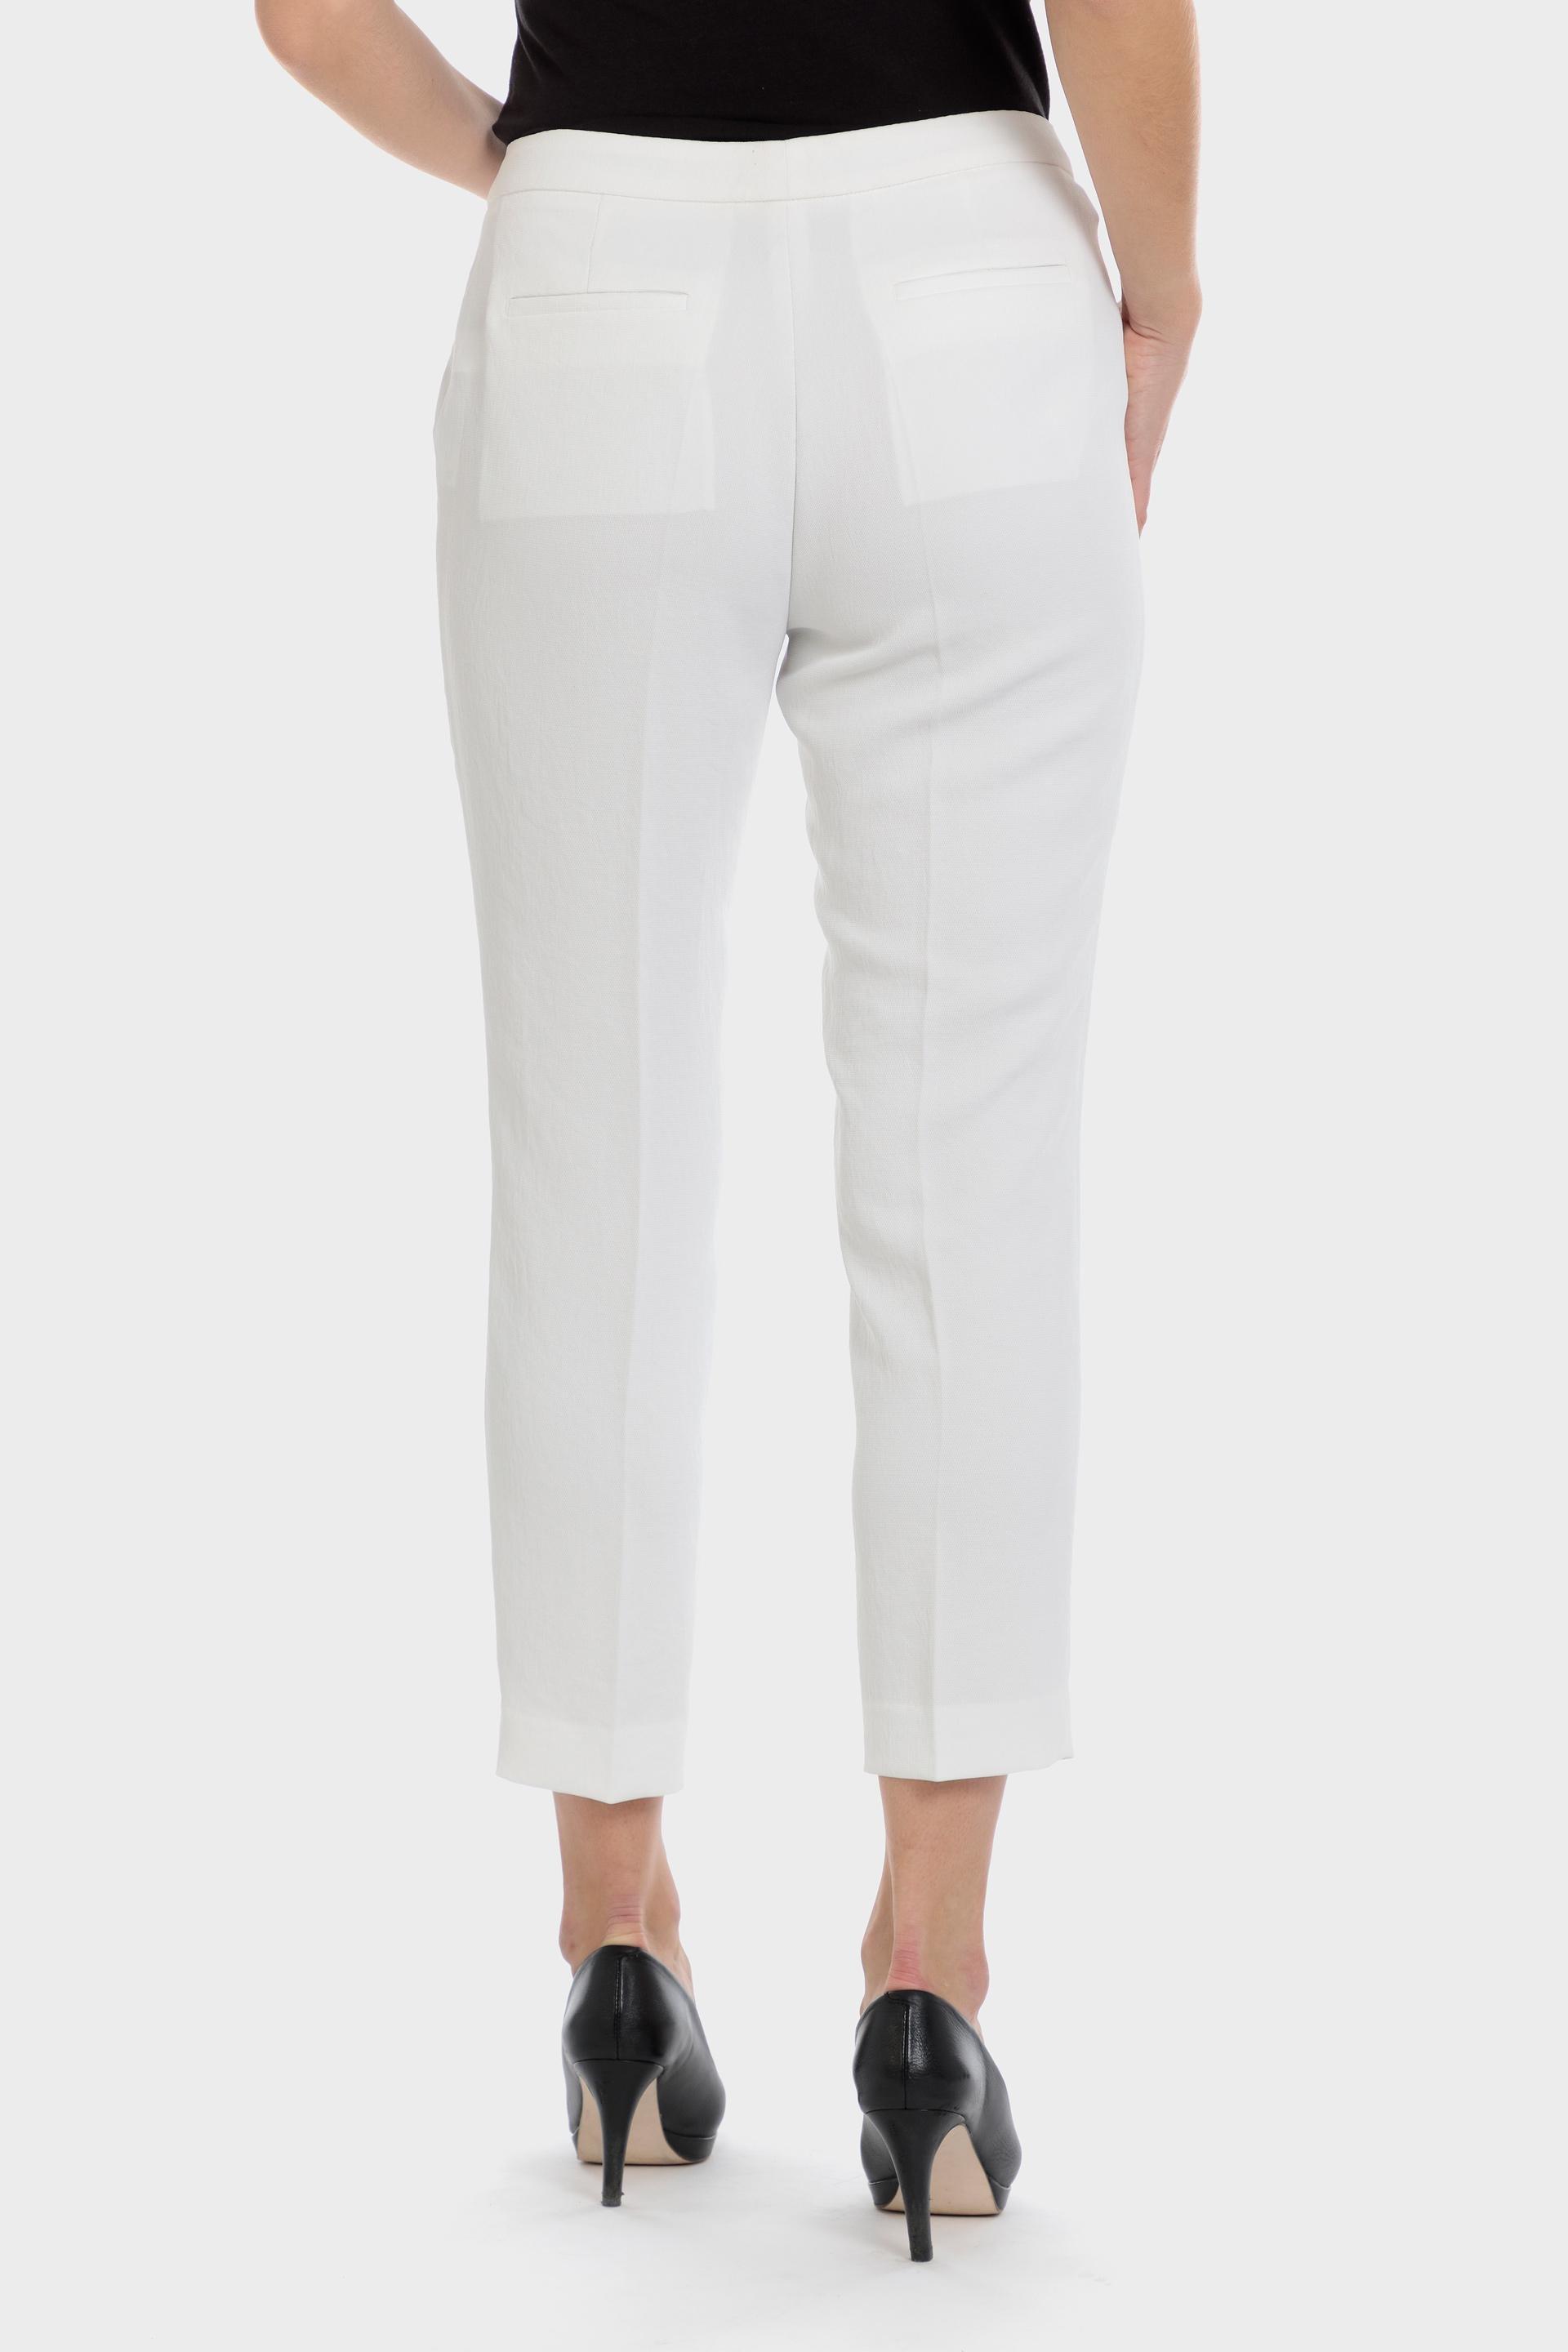 Punt Roma - White Japonese Fabric Capri Trousers